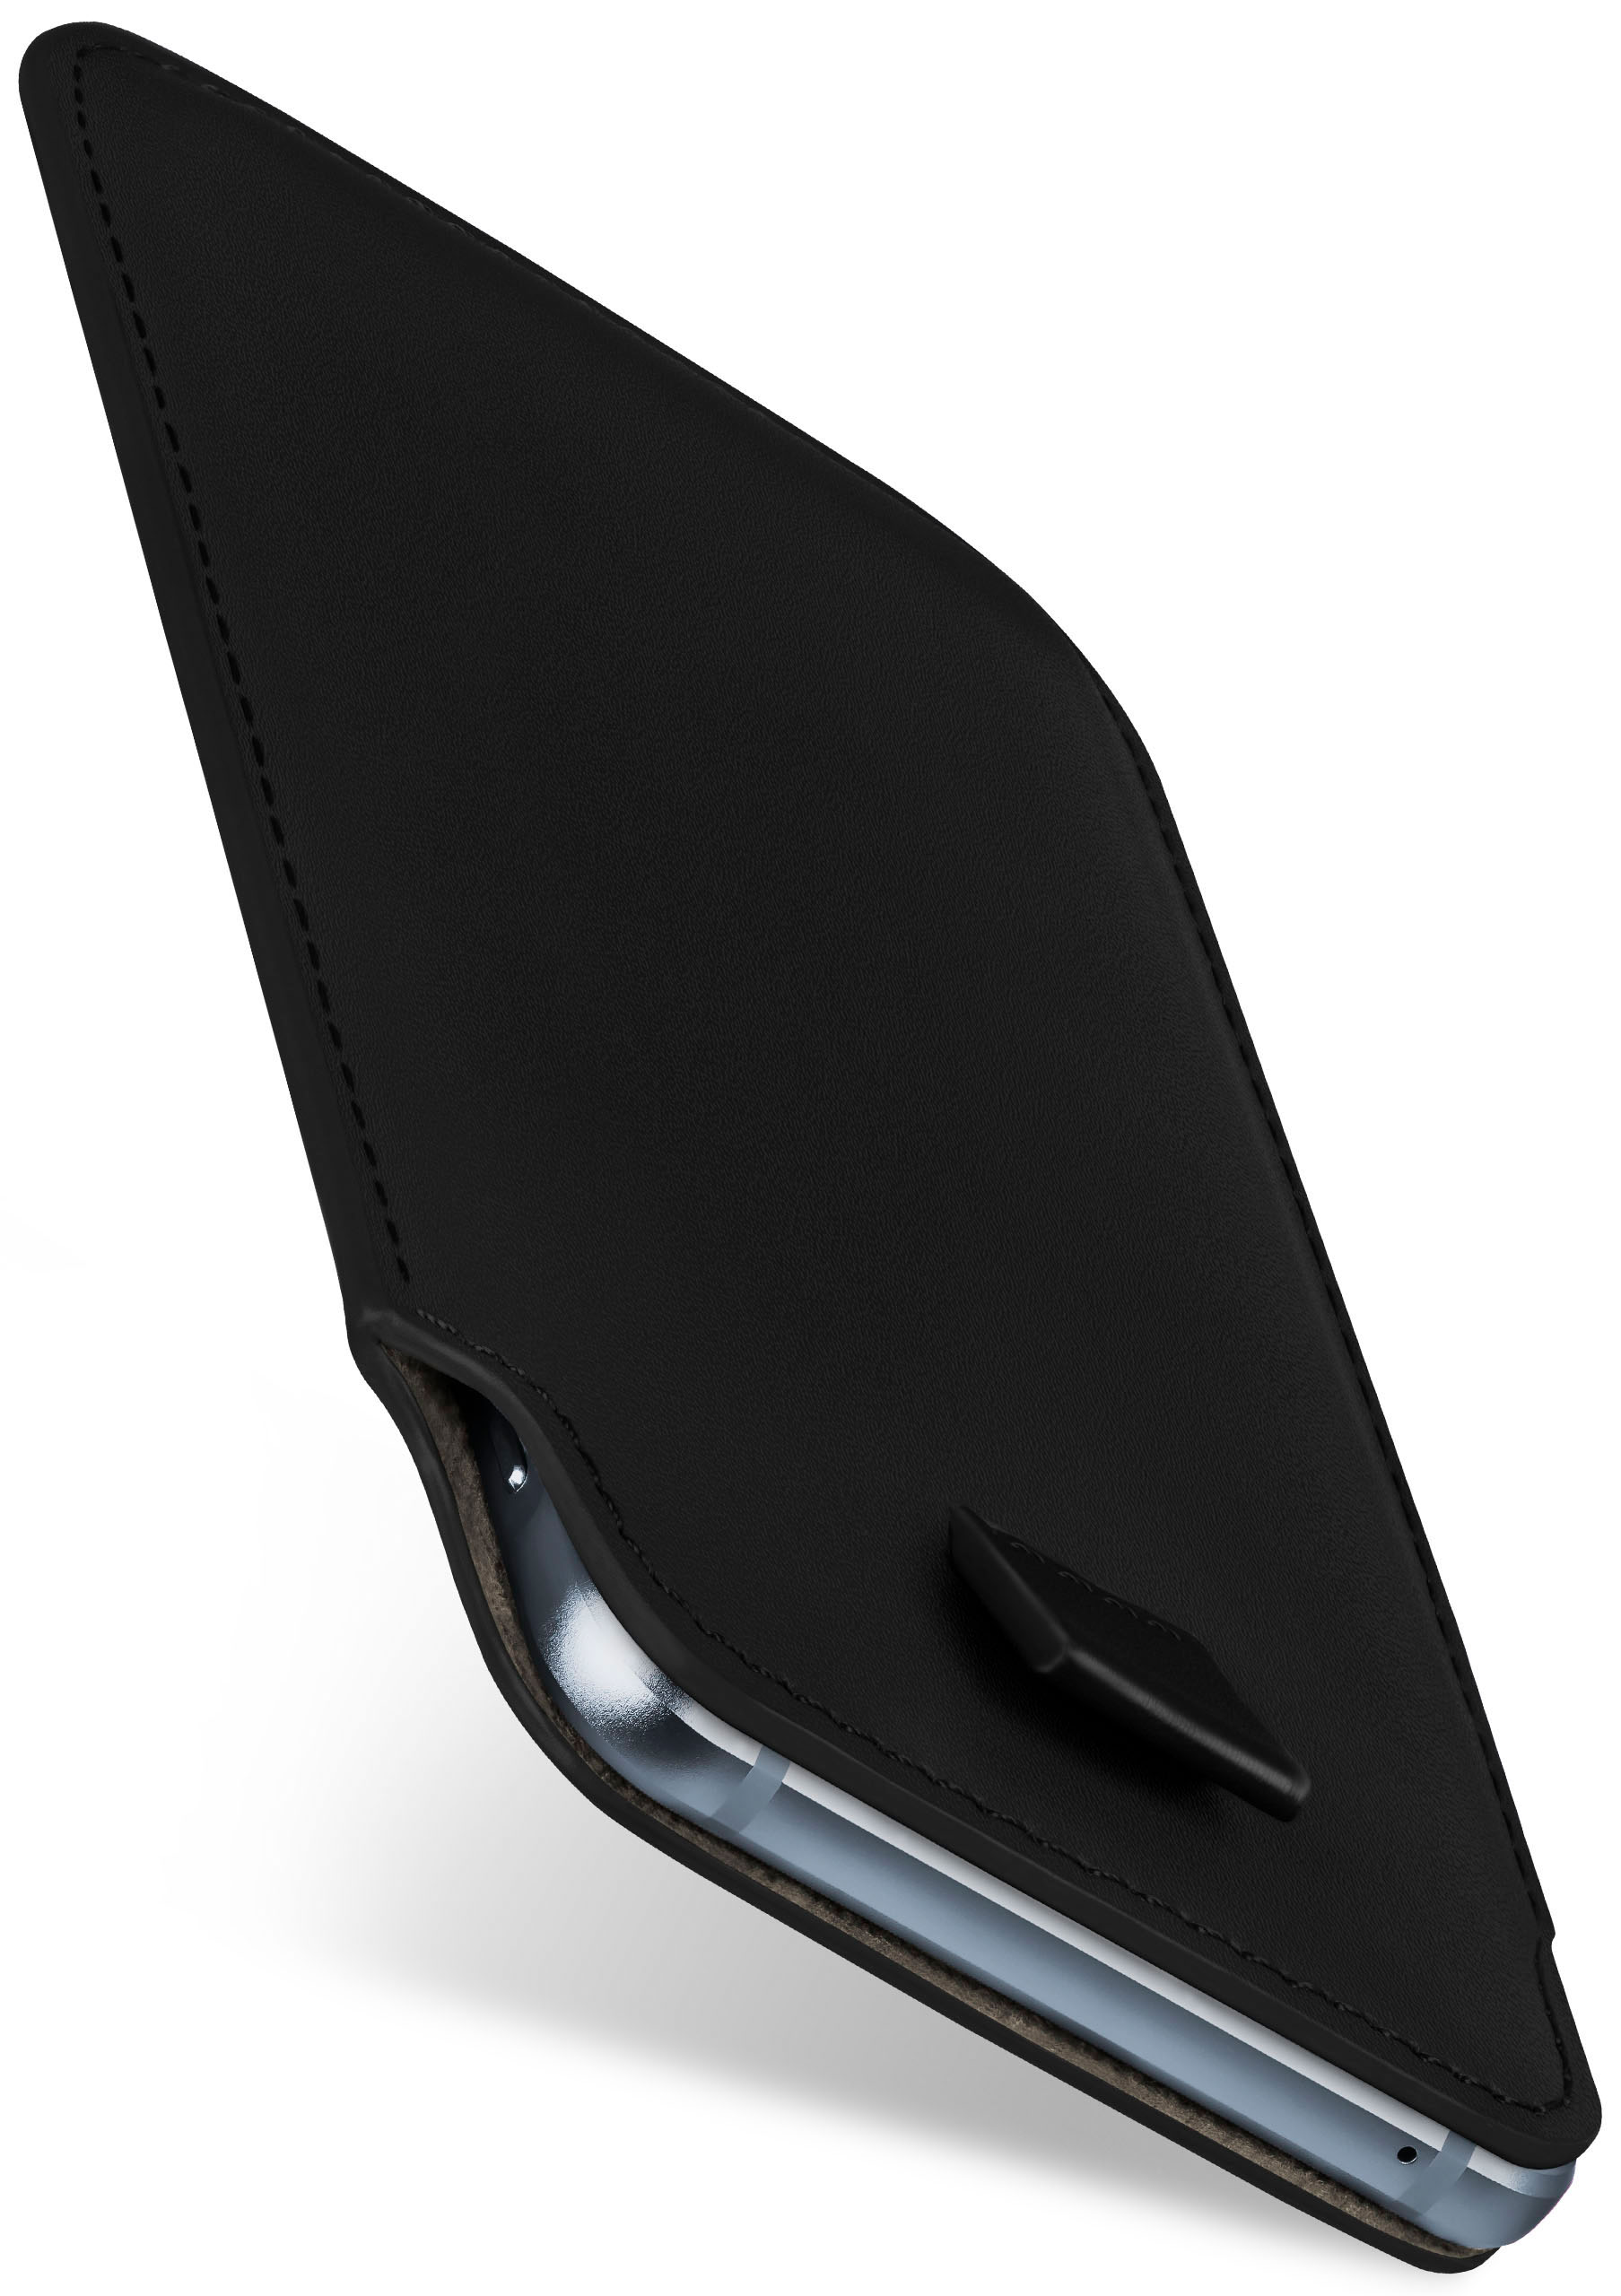 Case, MOEX X20/X20 Slide Pro, Full Cover, Deep-Black Cubot,